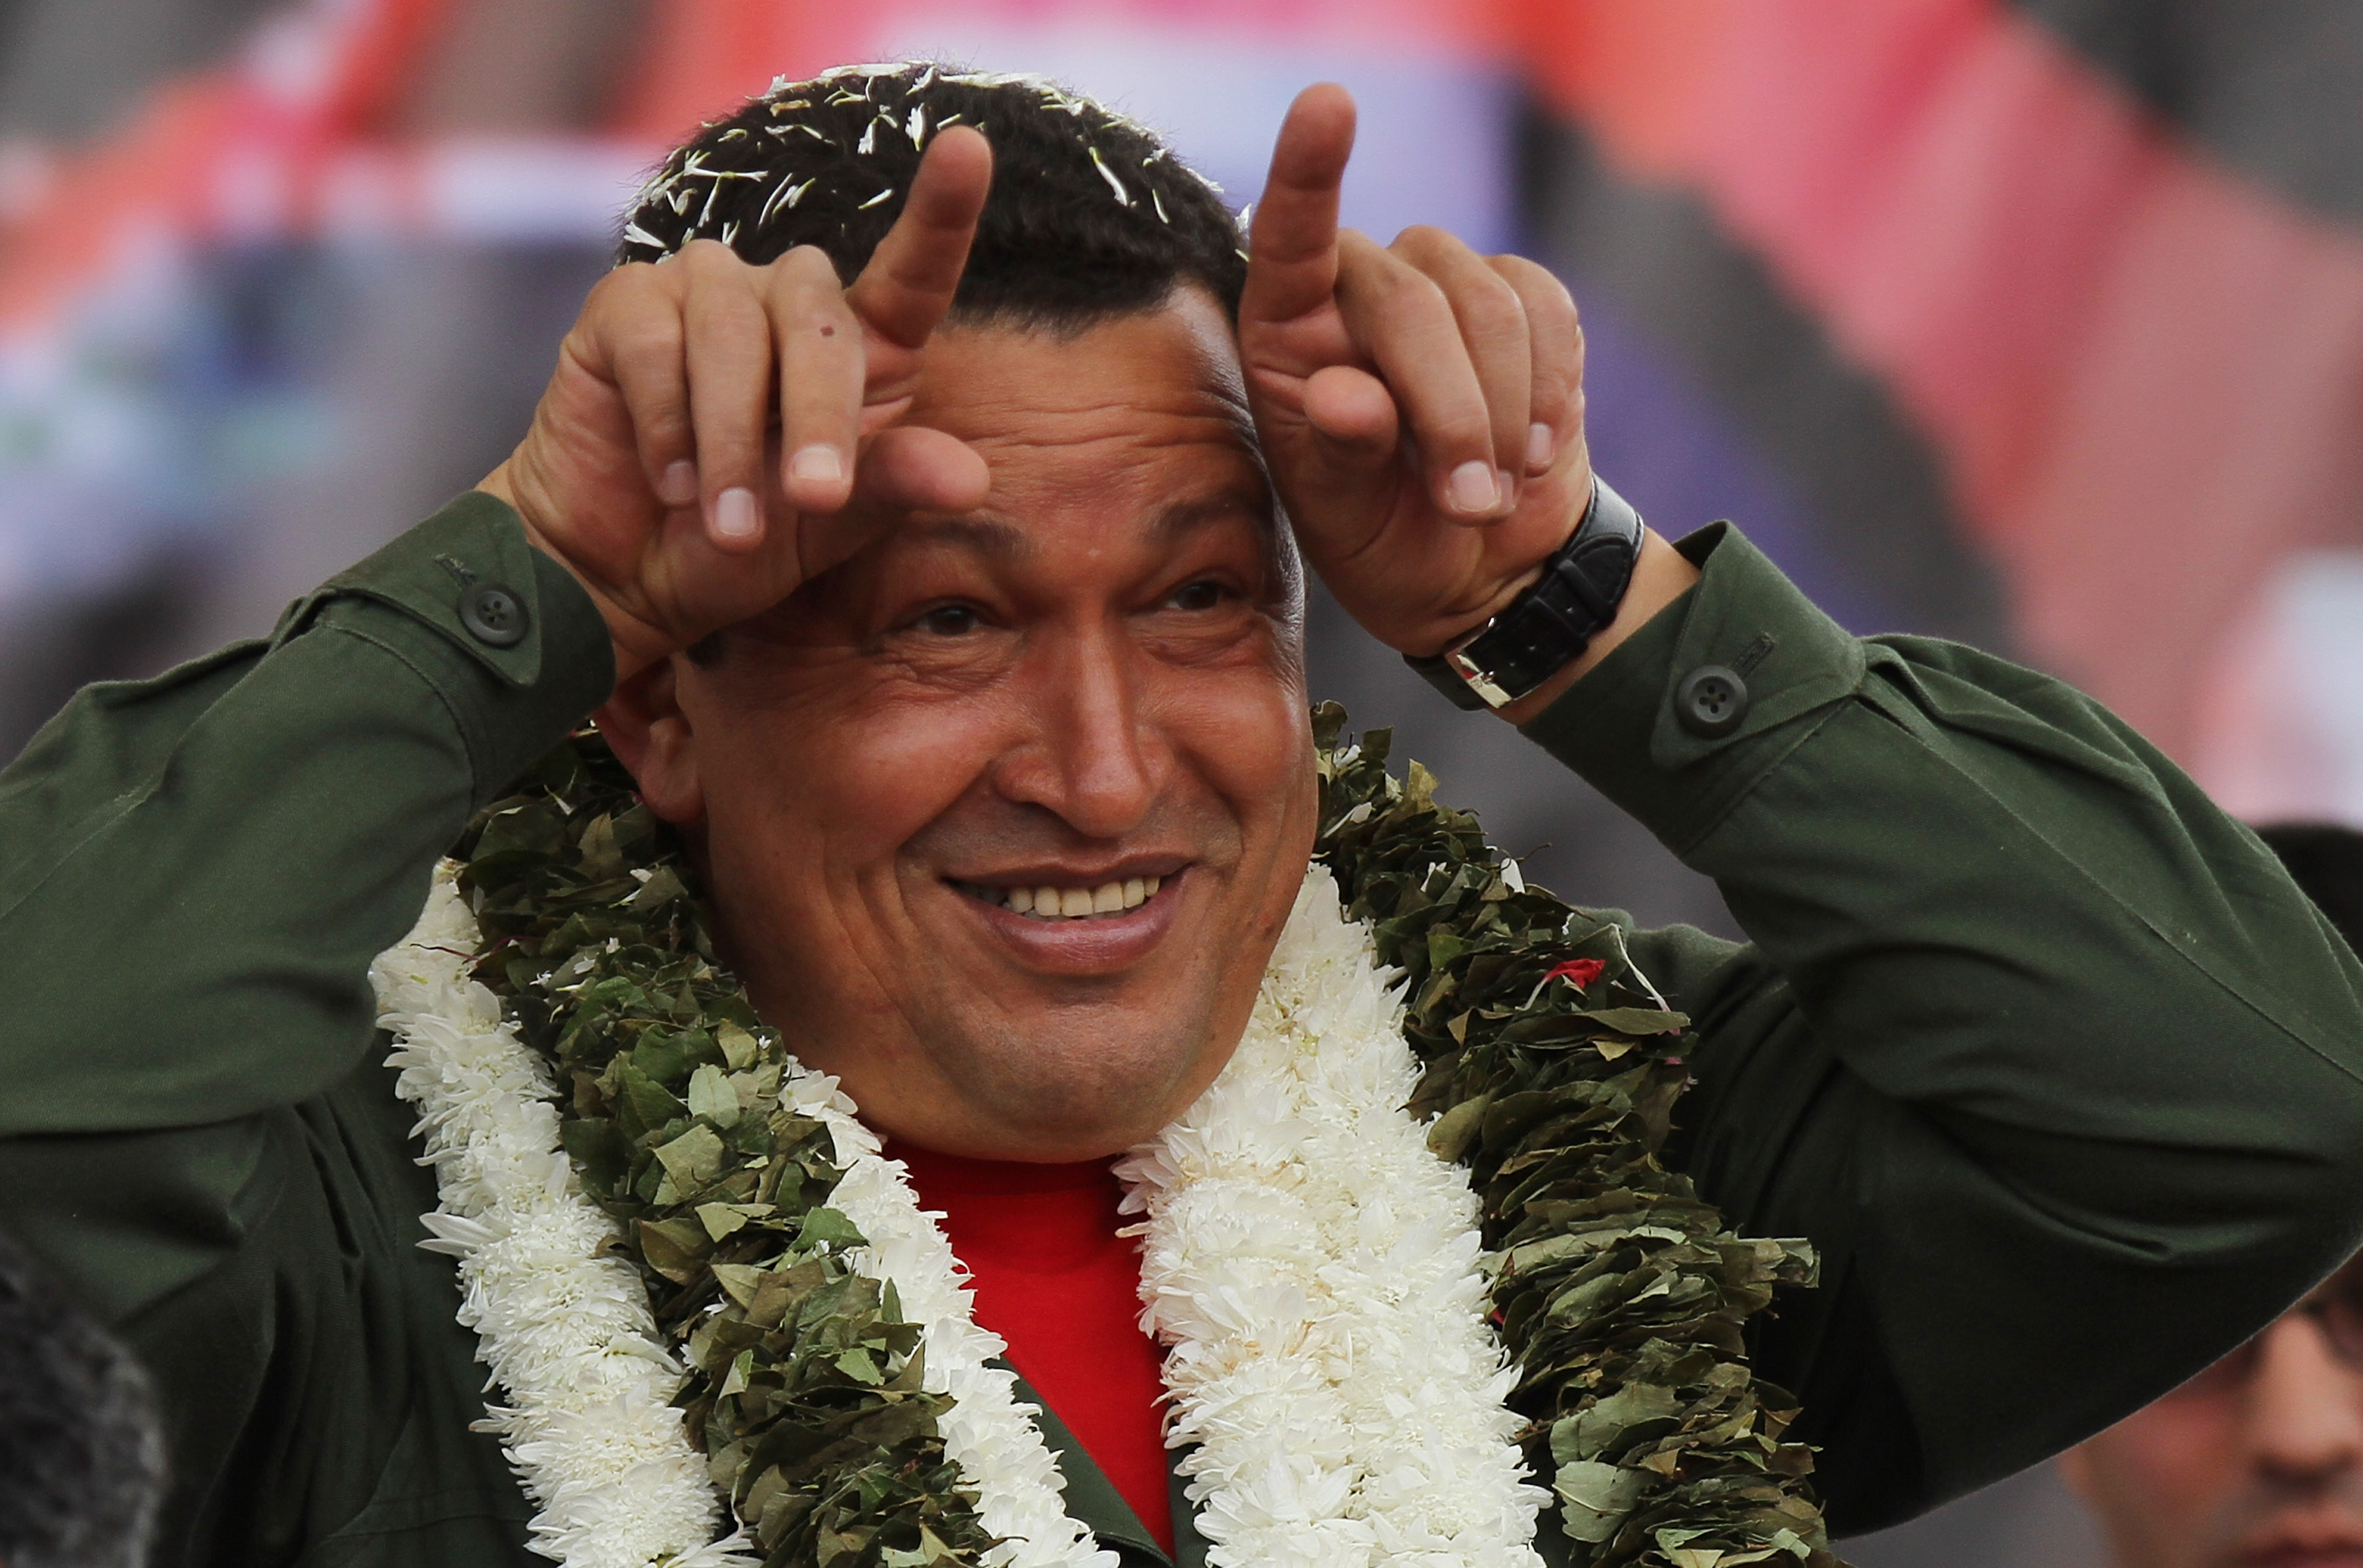 Hugo Chavez, Venezuela, Brott och straff, Kritik, Polisen